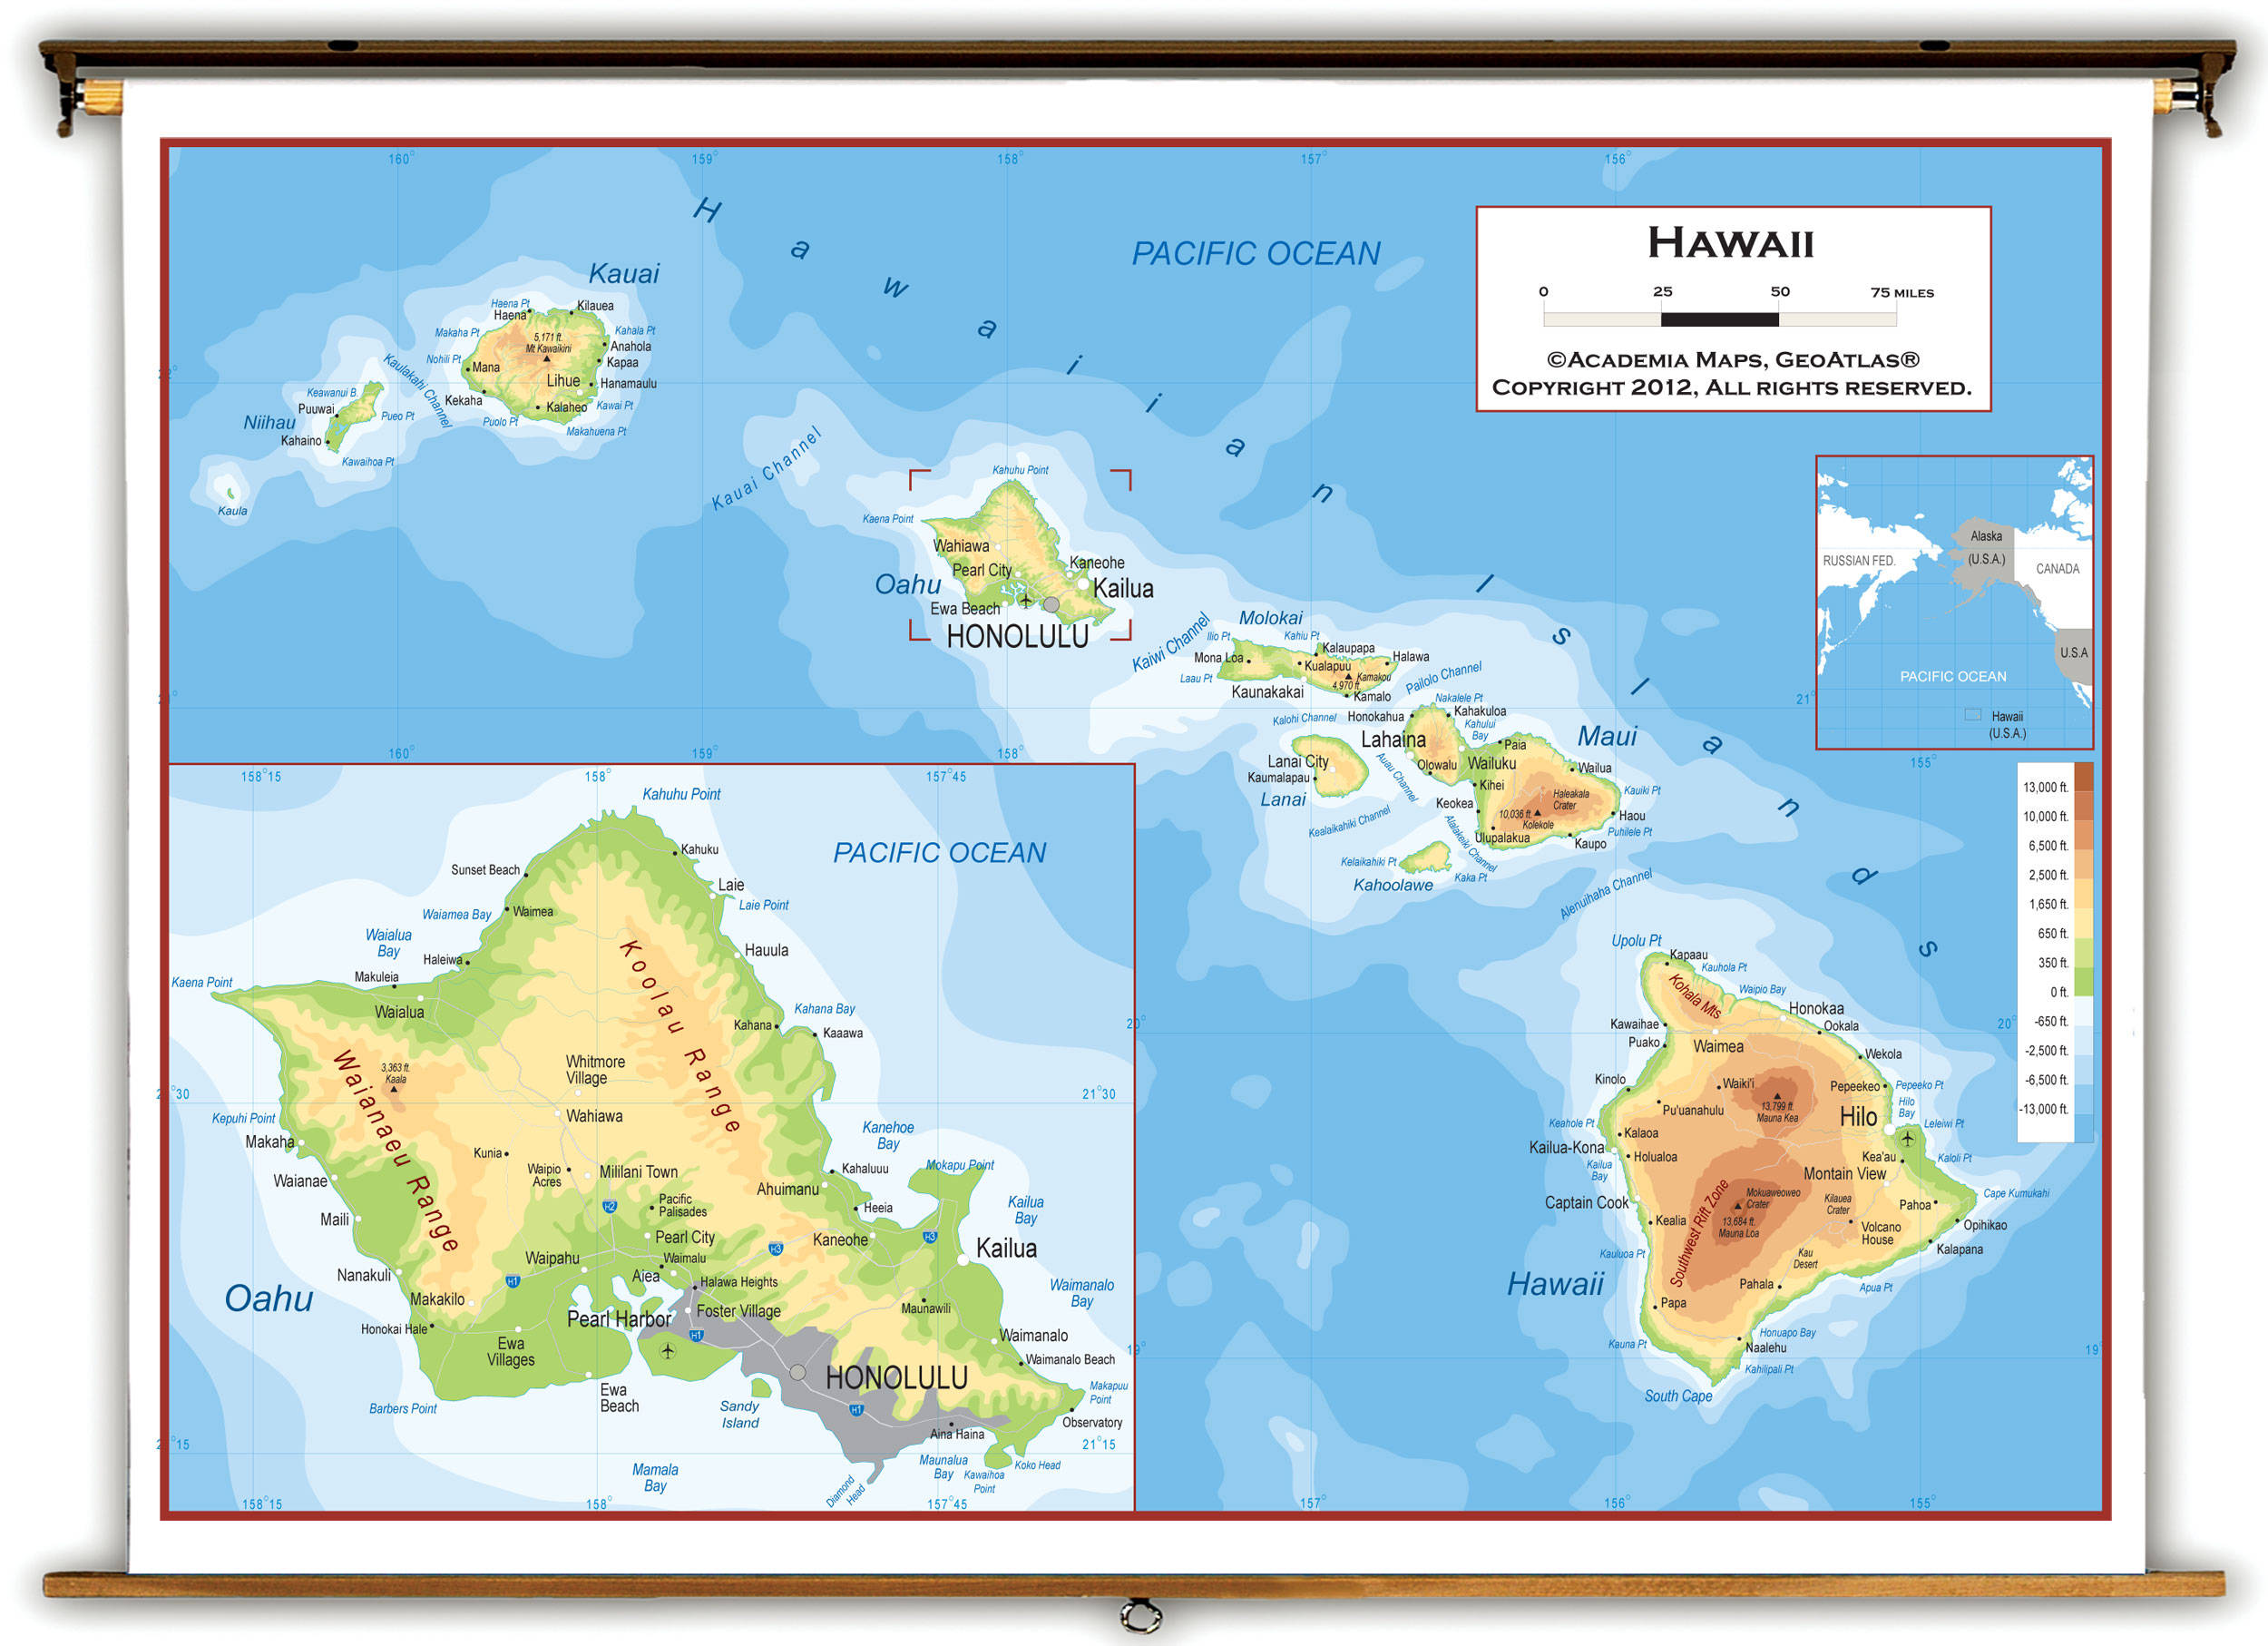 Гавайи какая страна. Архипелаг Гавайские острова. Гавайские острова карта географическая. Штат Гавайи на карте.